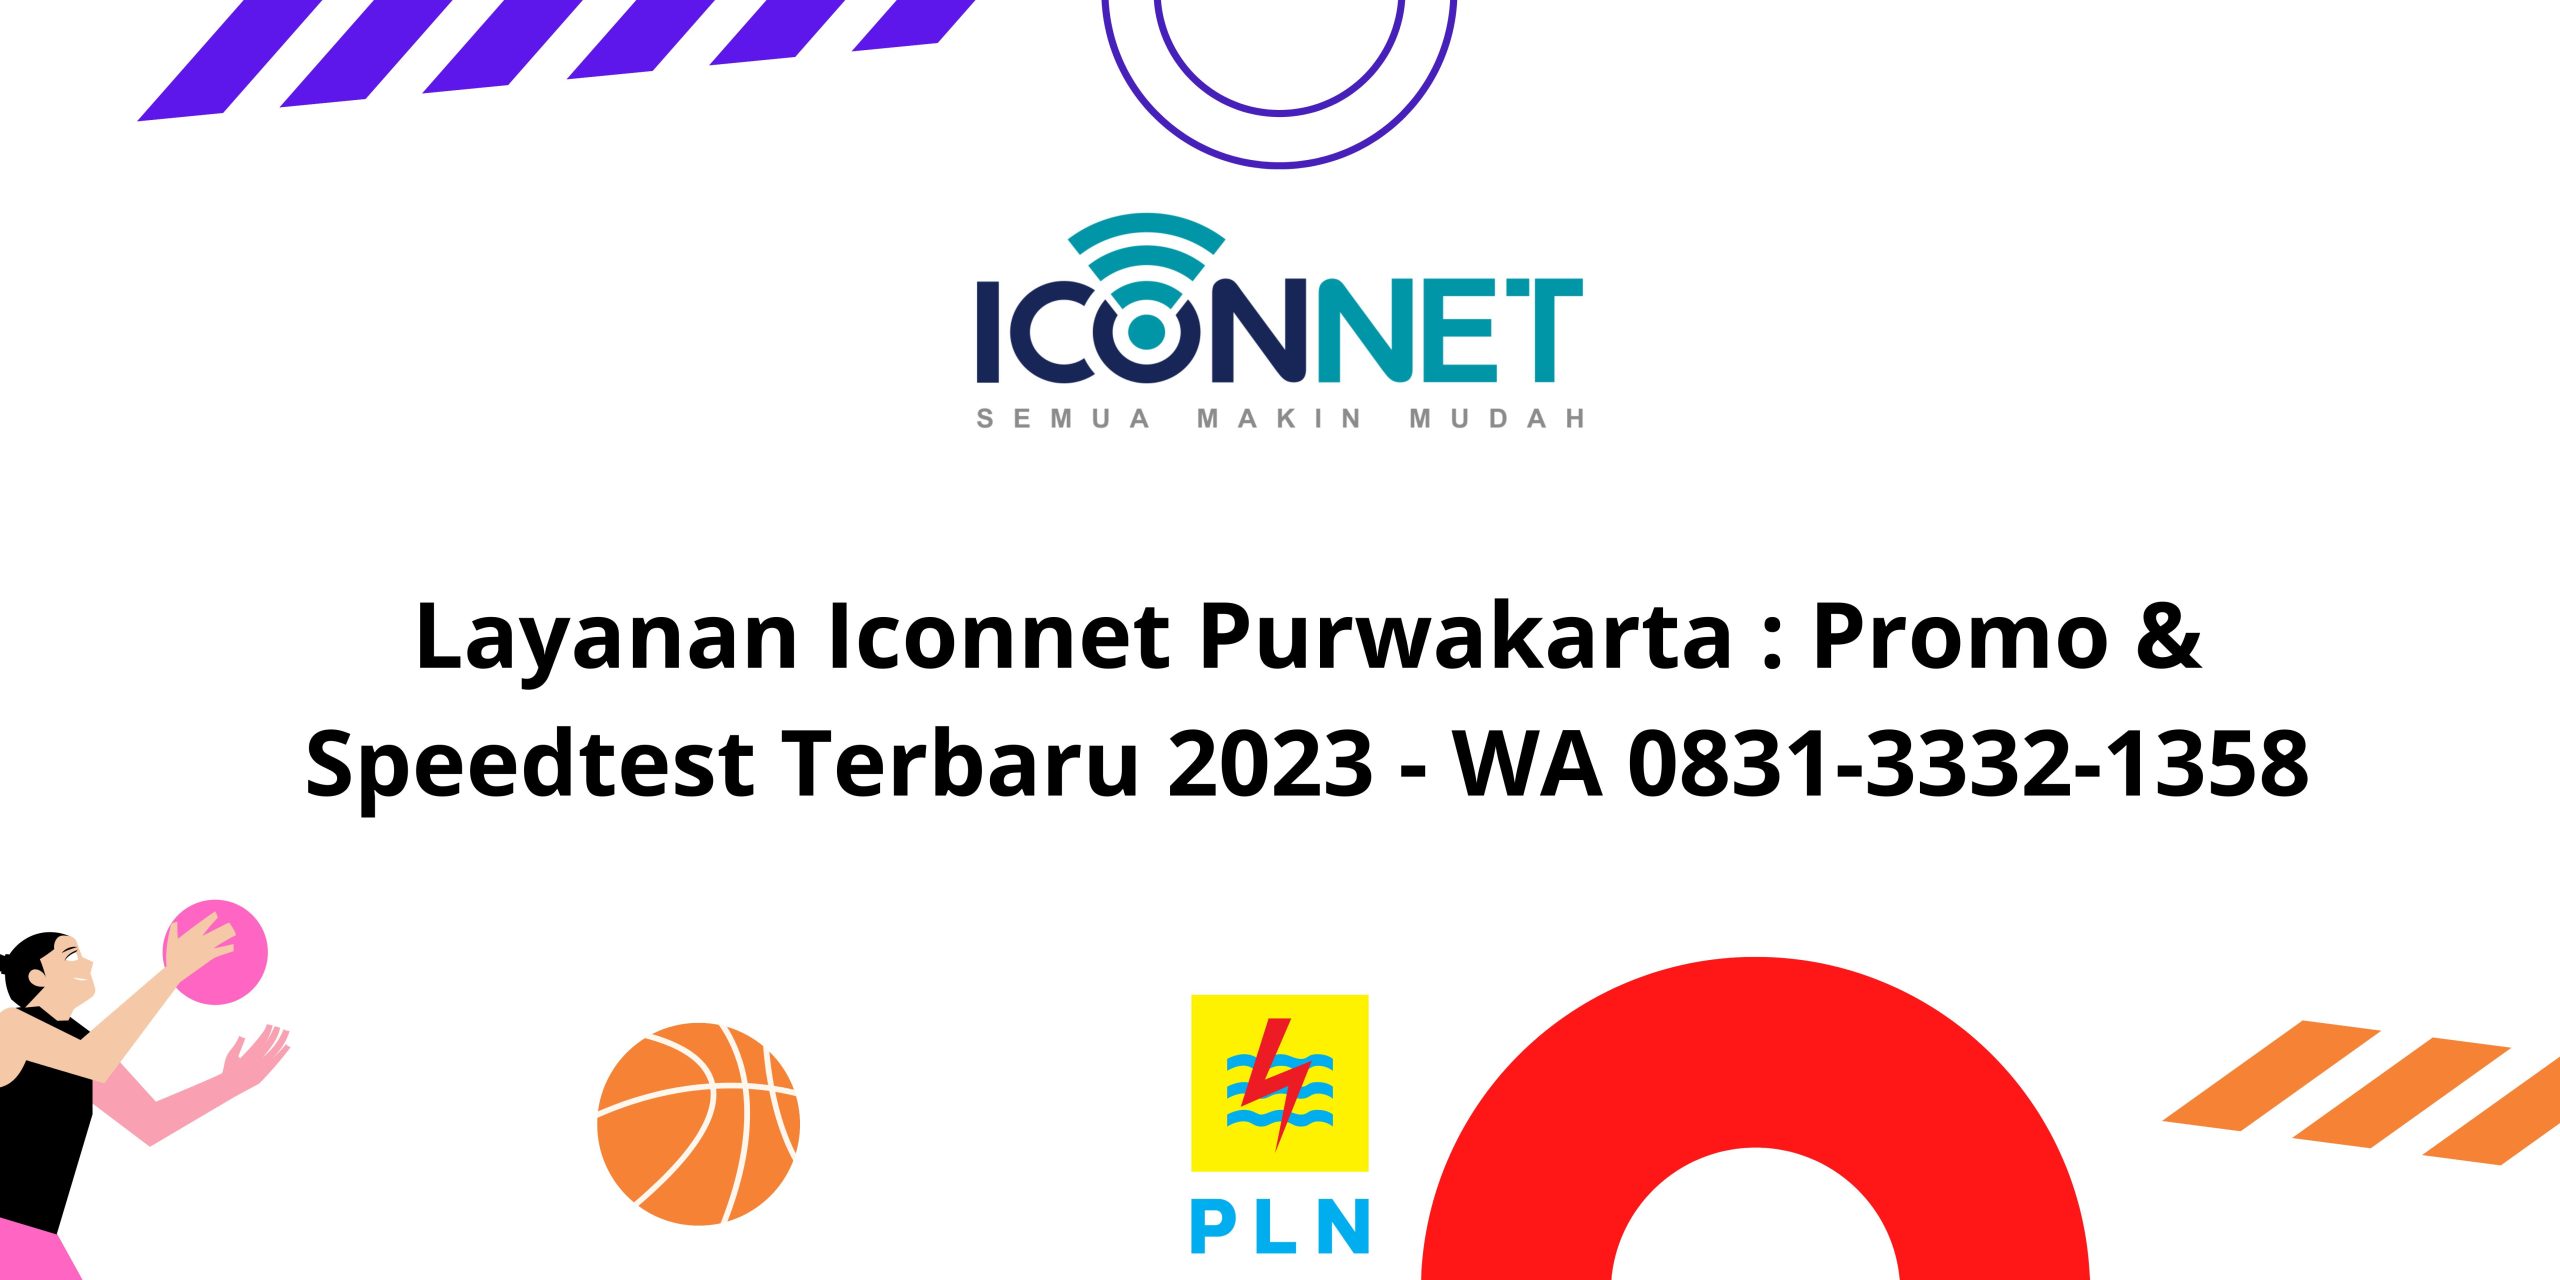 Layanan Iconnet Purwakarta